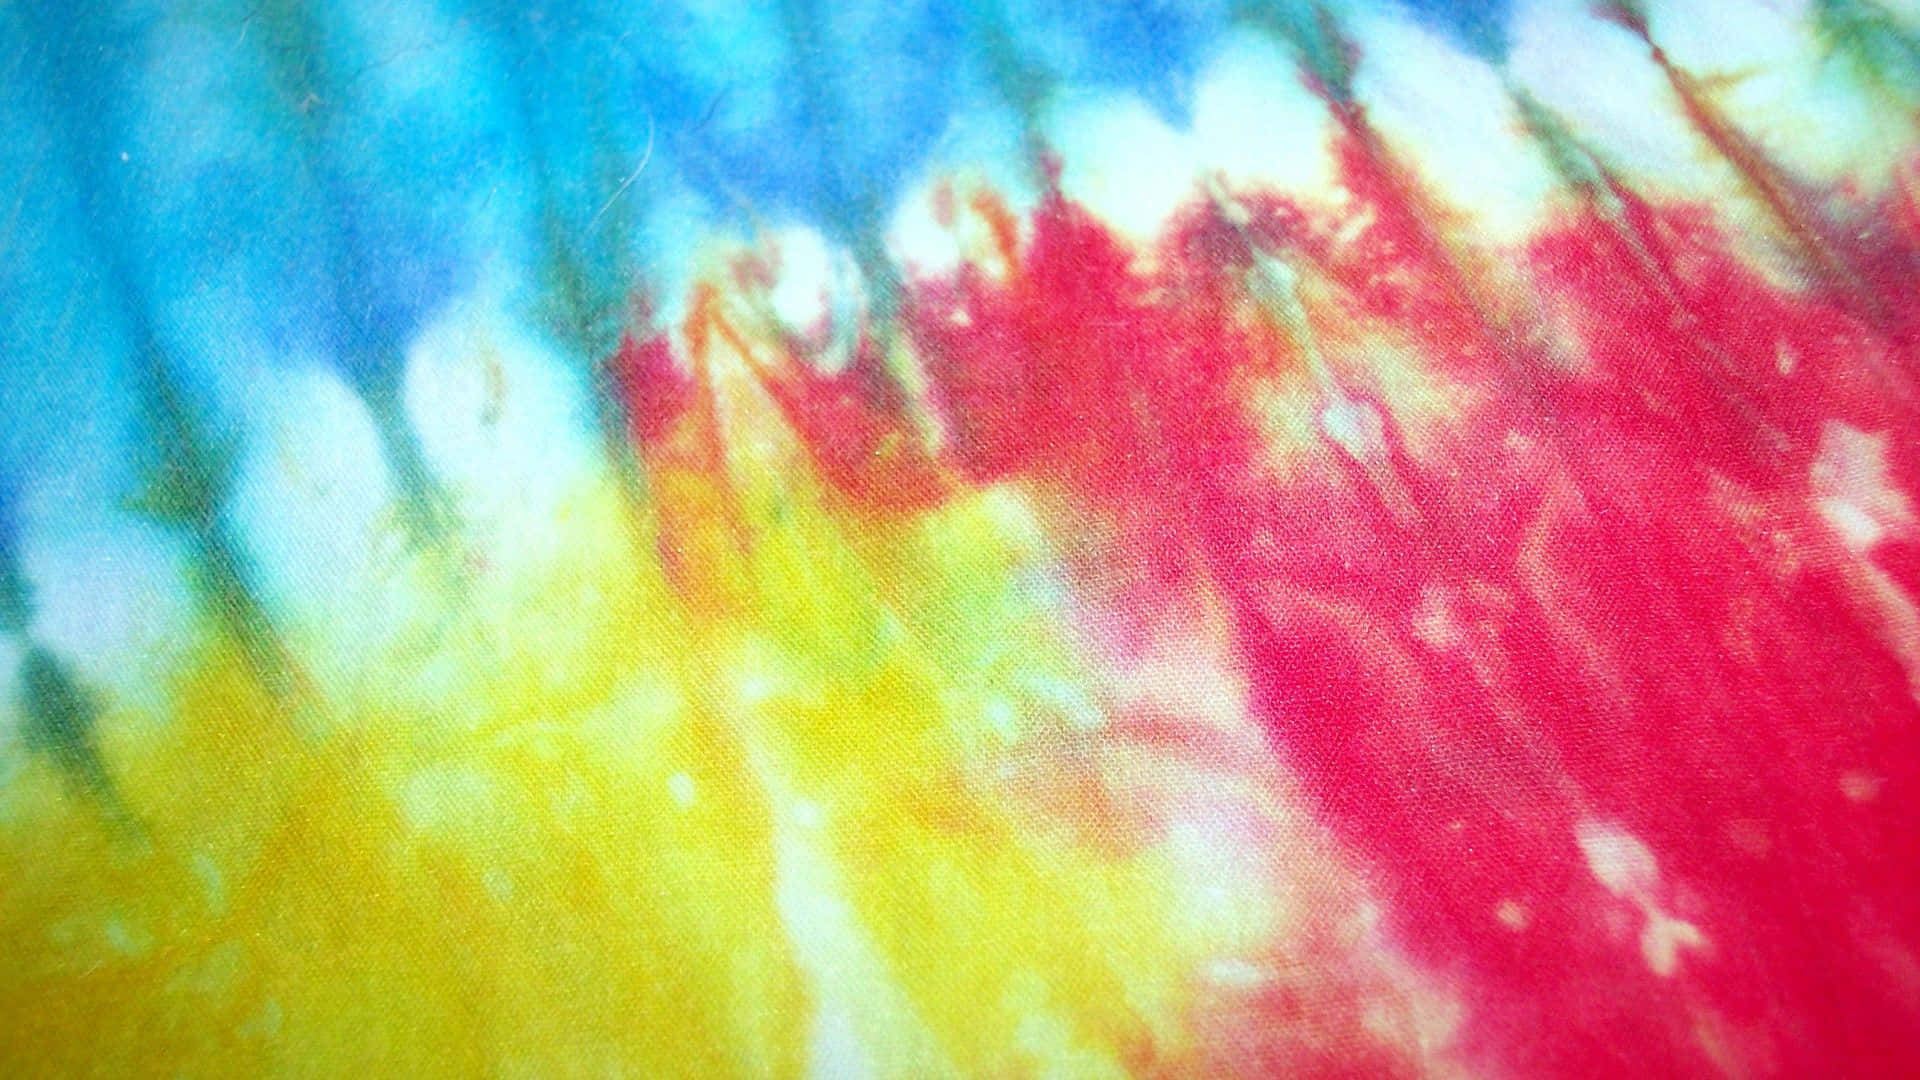 100+] Pastel Tie Dye Wallpapers